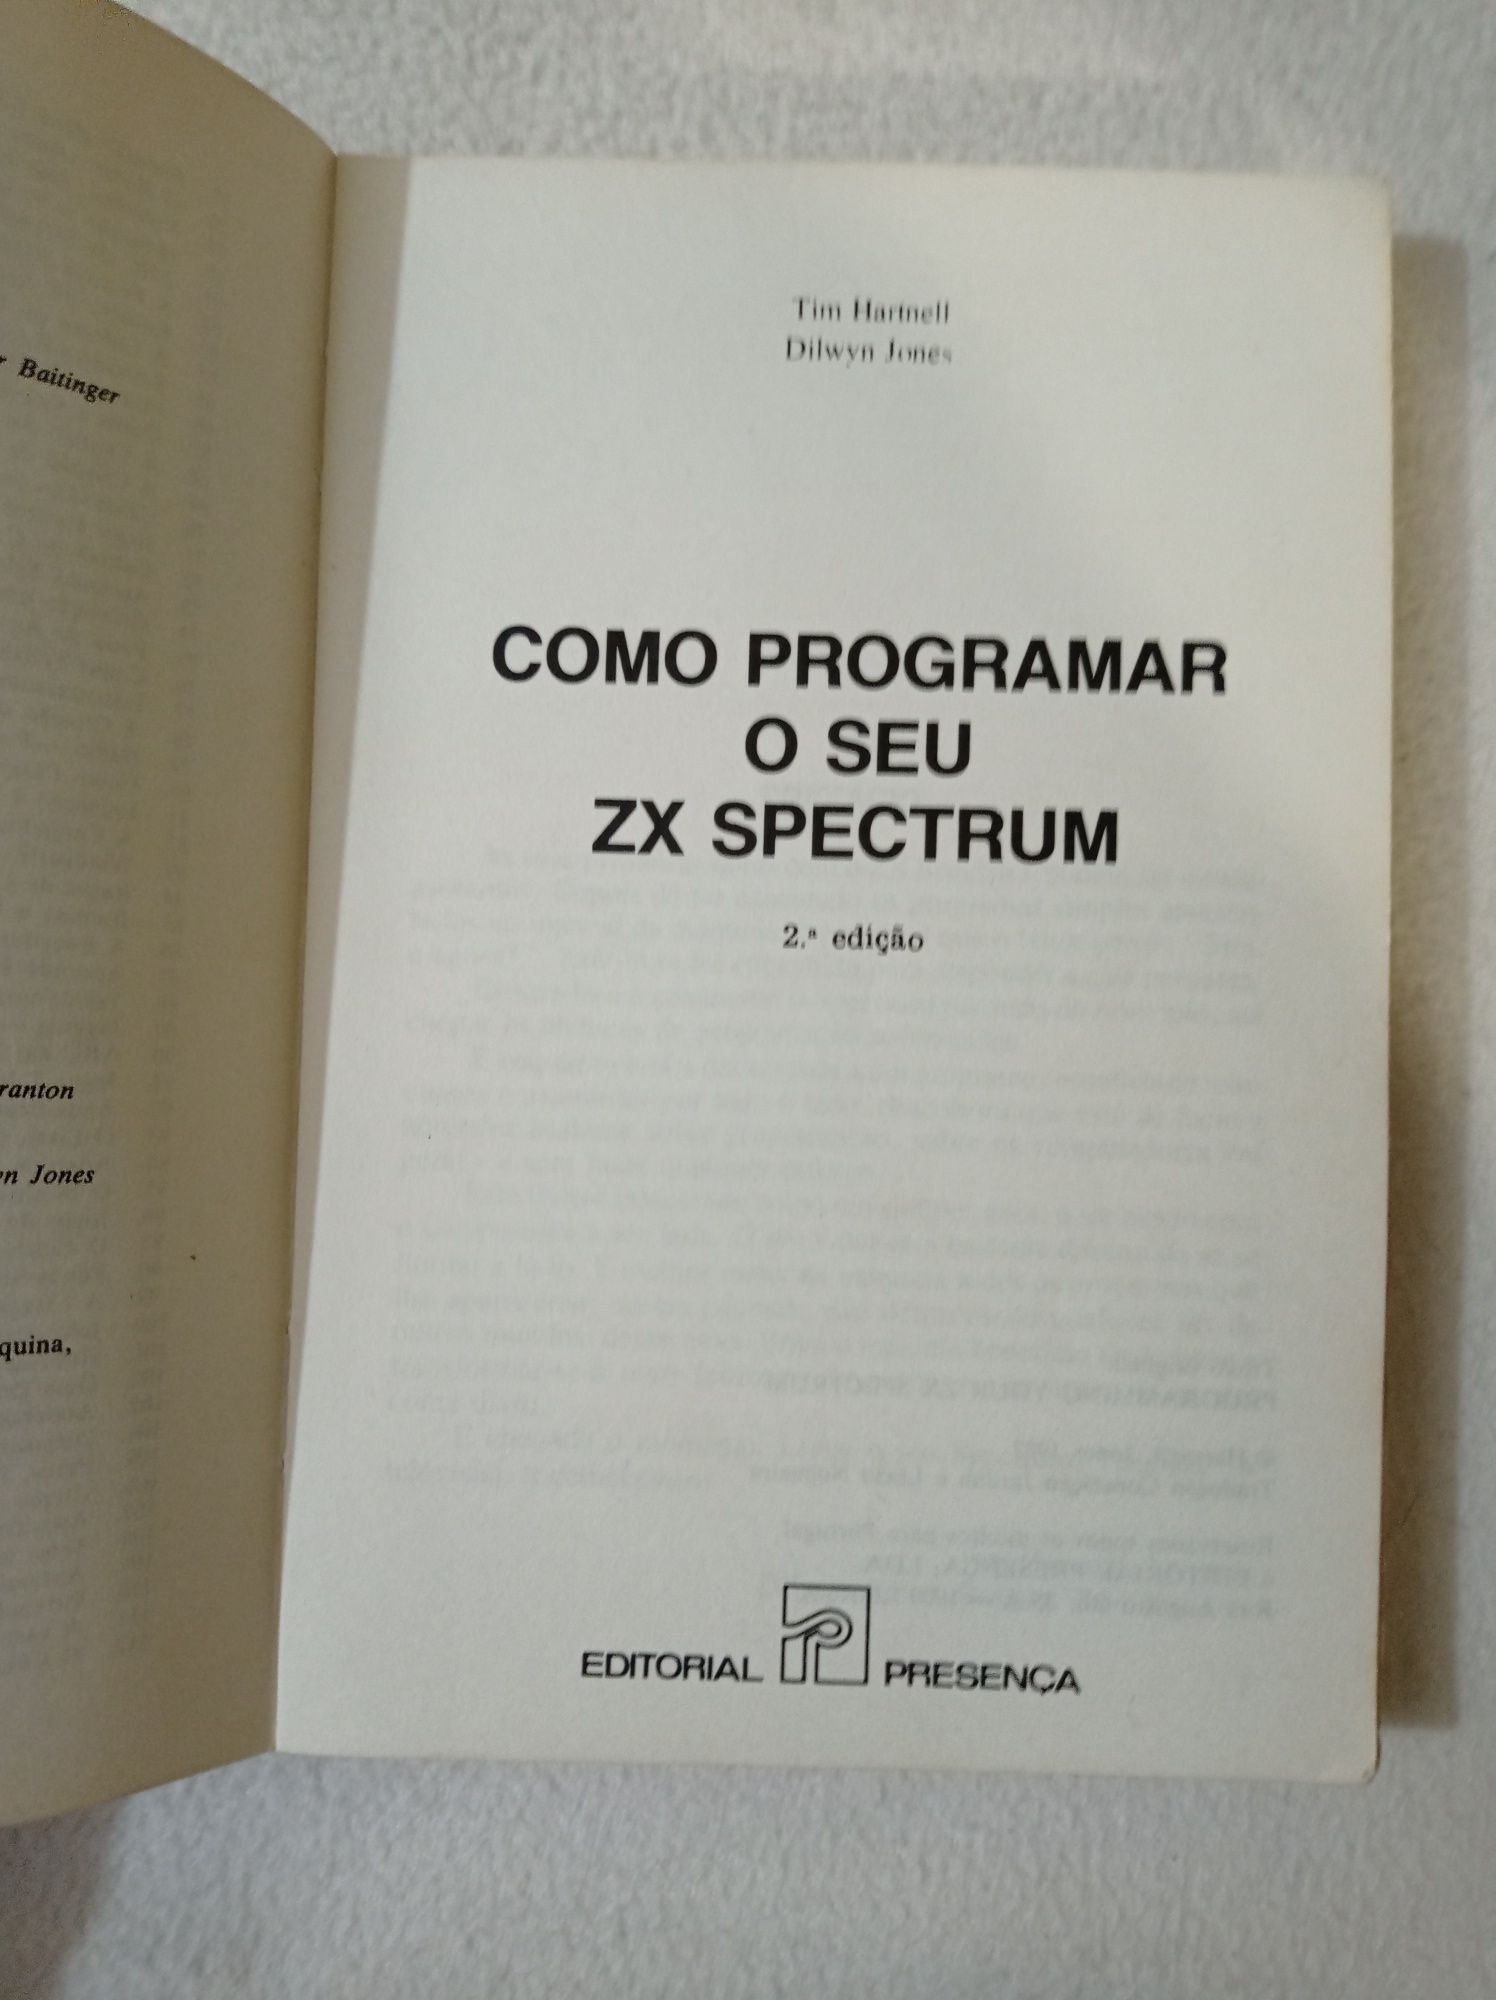 Como programar o seu ZX spectrum - Tim Hartnell e Dilwyn Jones